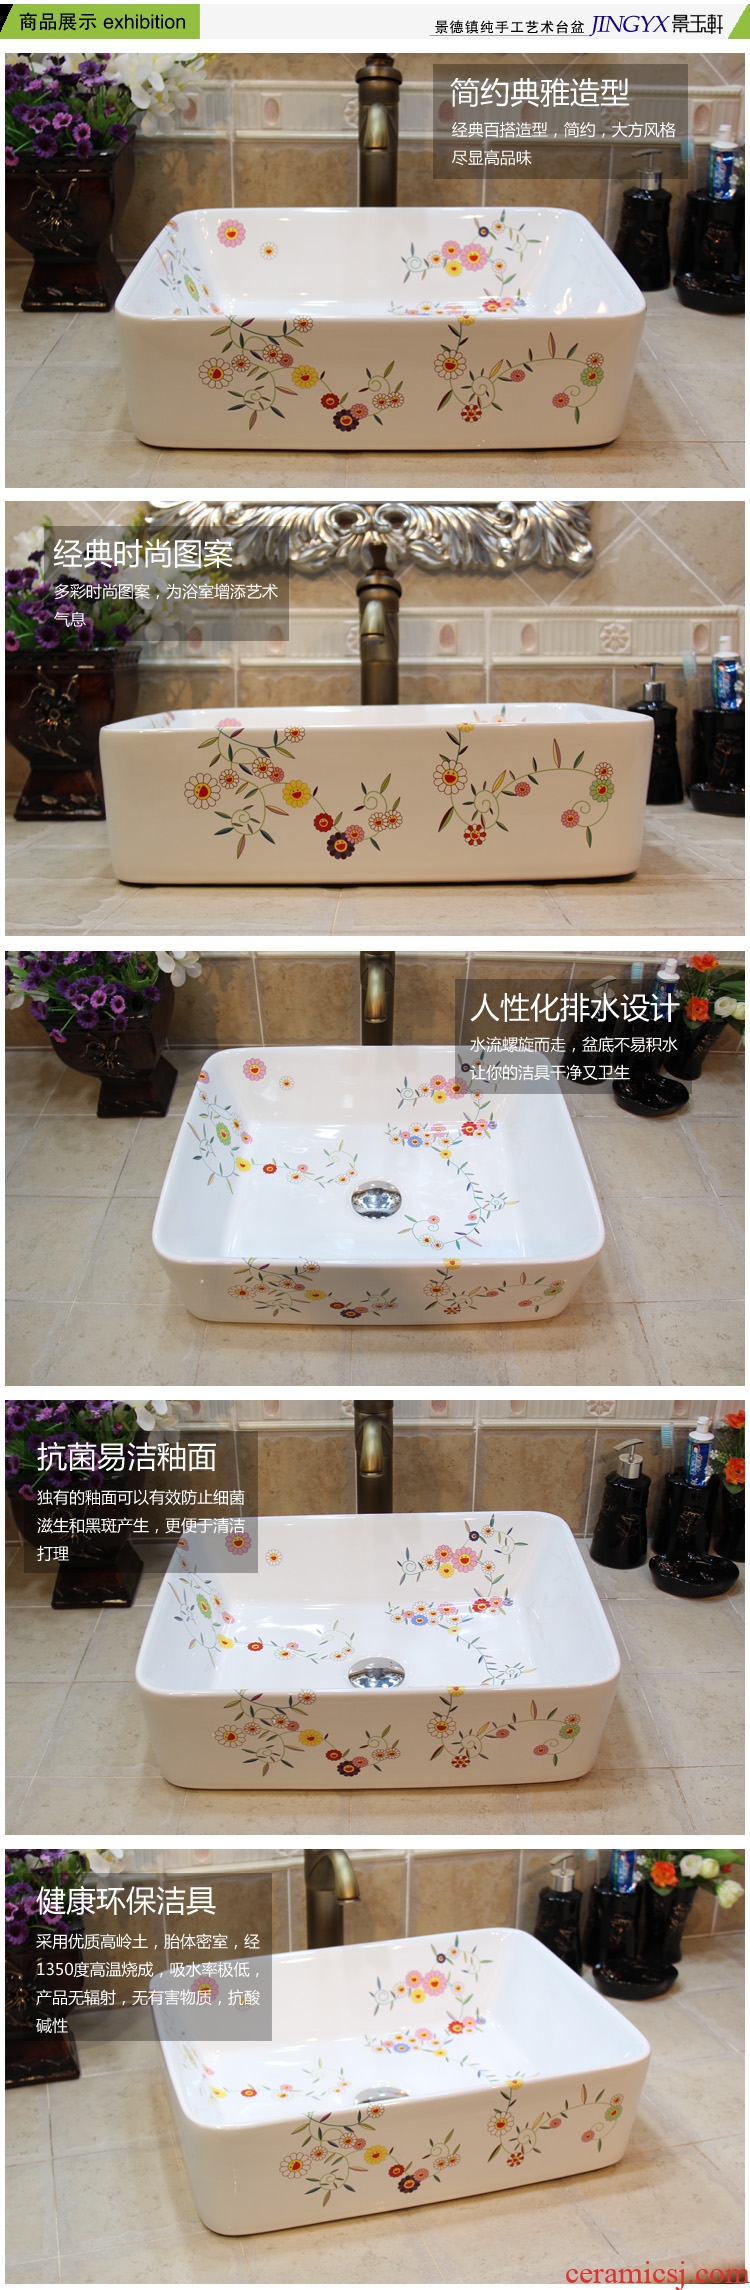 Jingdezhen ceramic art basin blue iris square high number of white on its sinks of much money